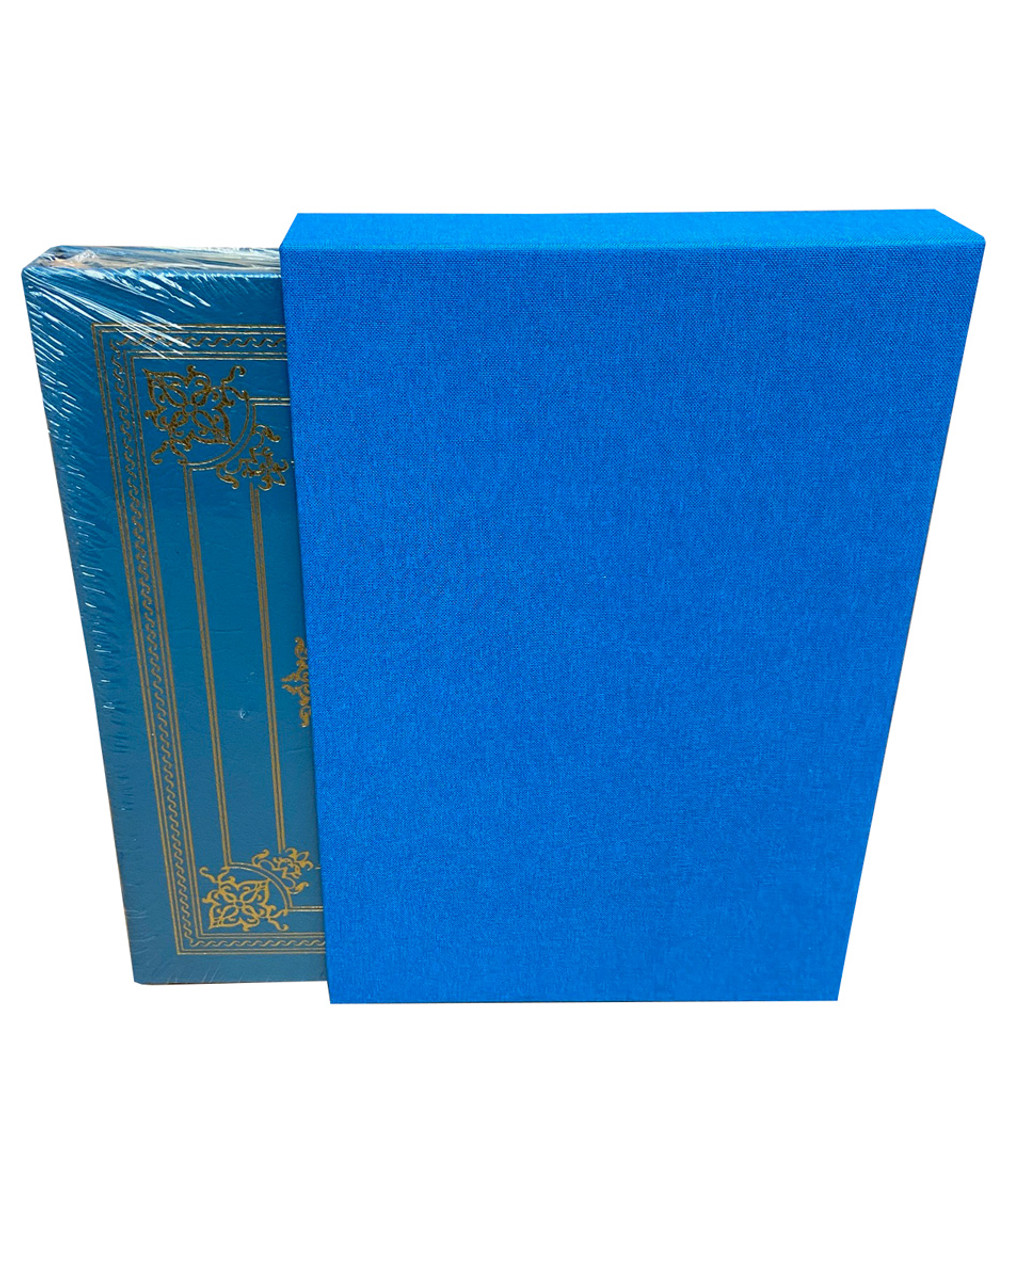 Kurt Vonnegut "Slaughterhouse-Five" Signed Limited Edition, Slipcased w/COA, Rare Light Blue Leather Edition [Sealed]